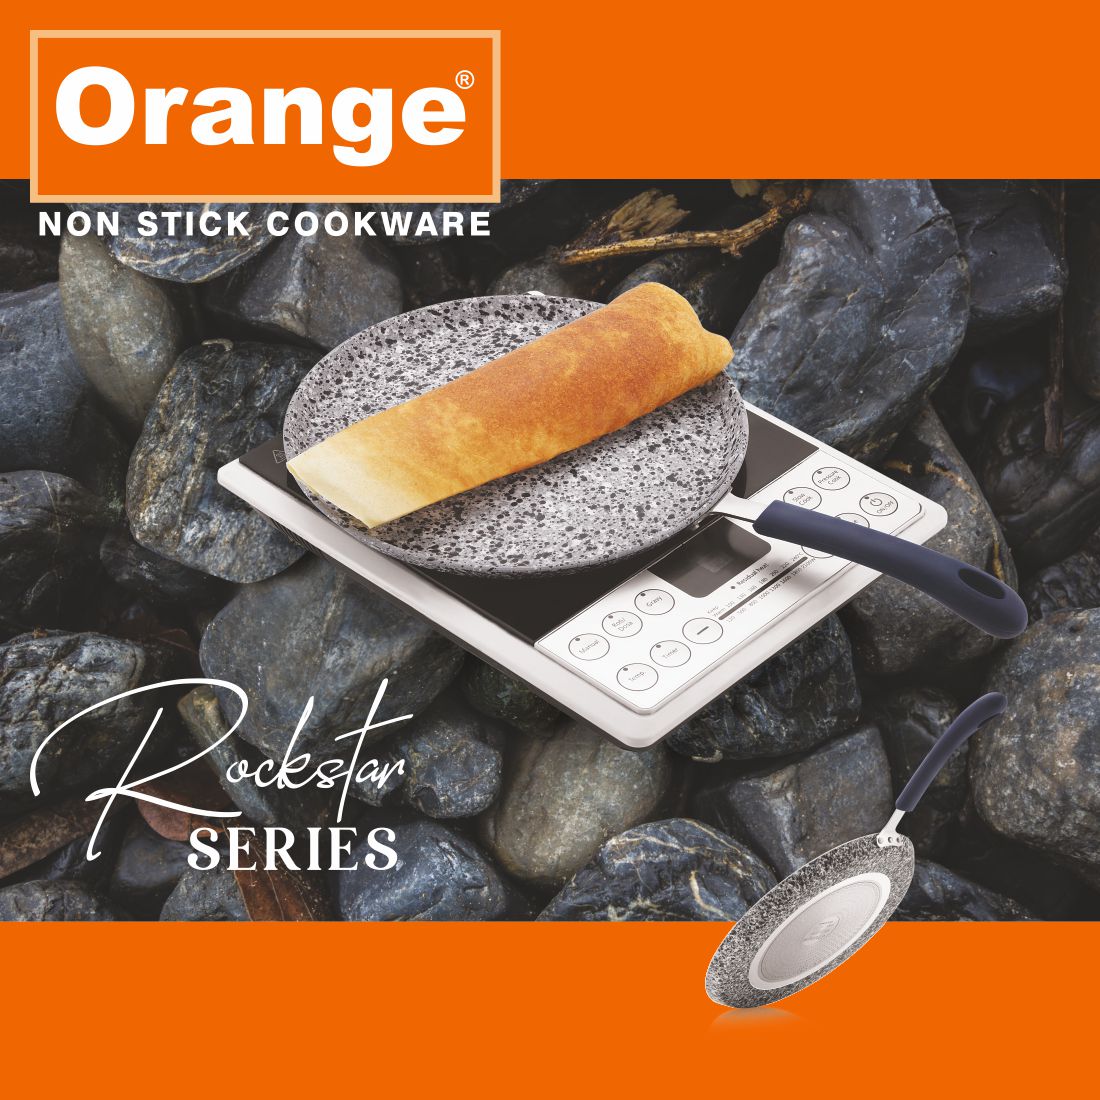 Orange Rockstar Series | Non-Stick Dosa Tawa/Flat Tawa | Elegant Look | Sturdy Handle | ISI Approved